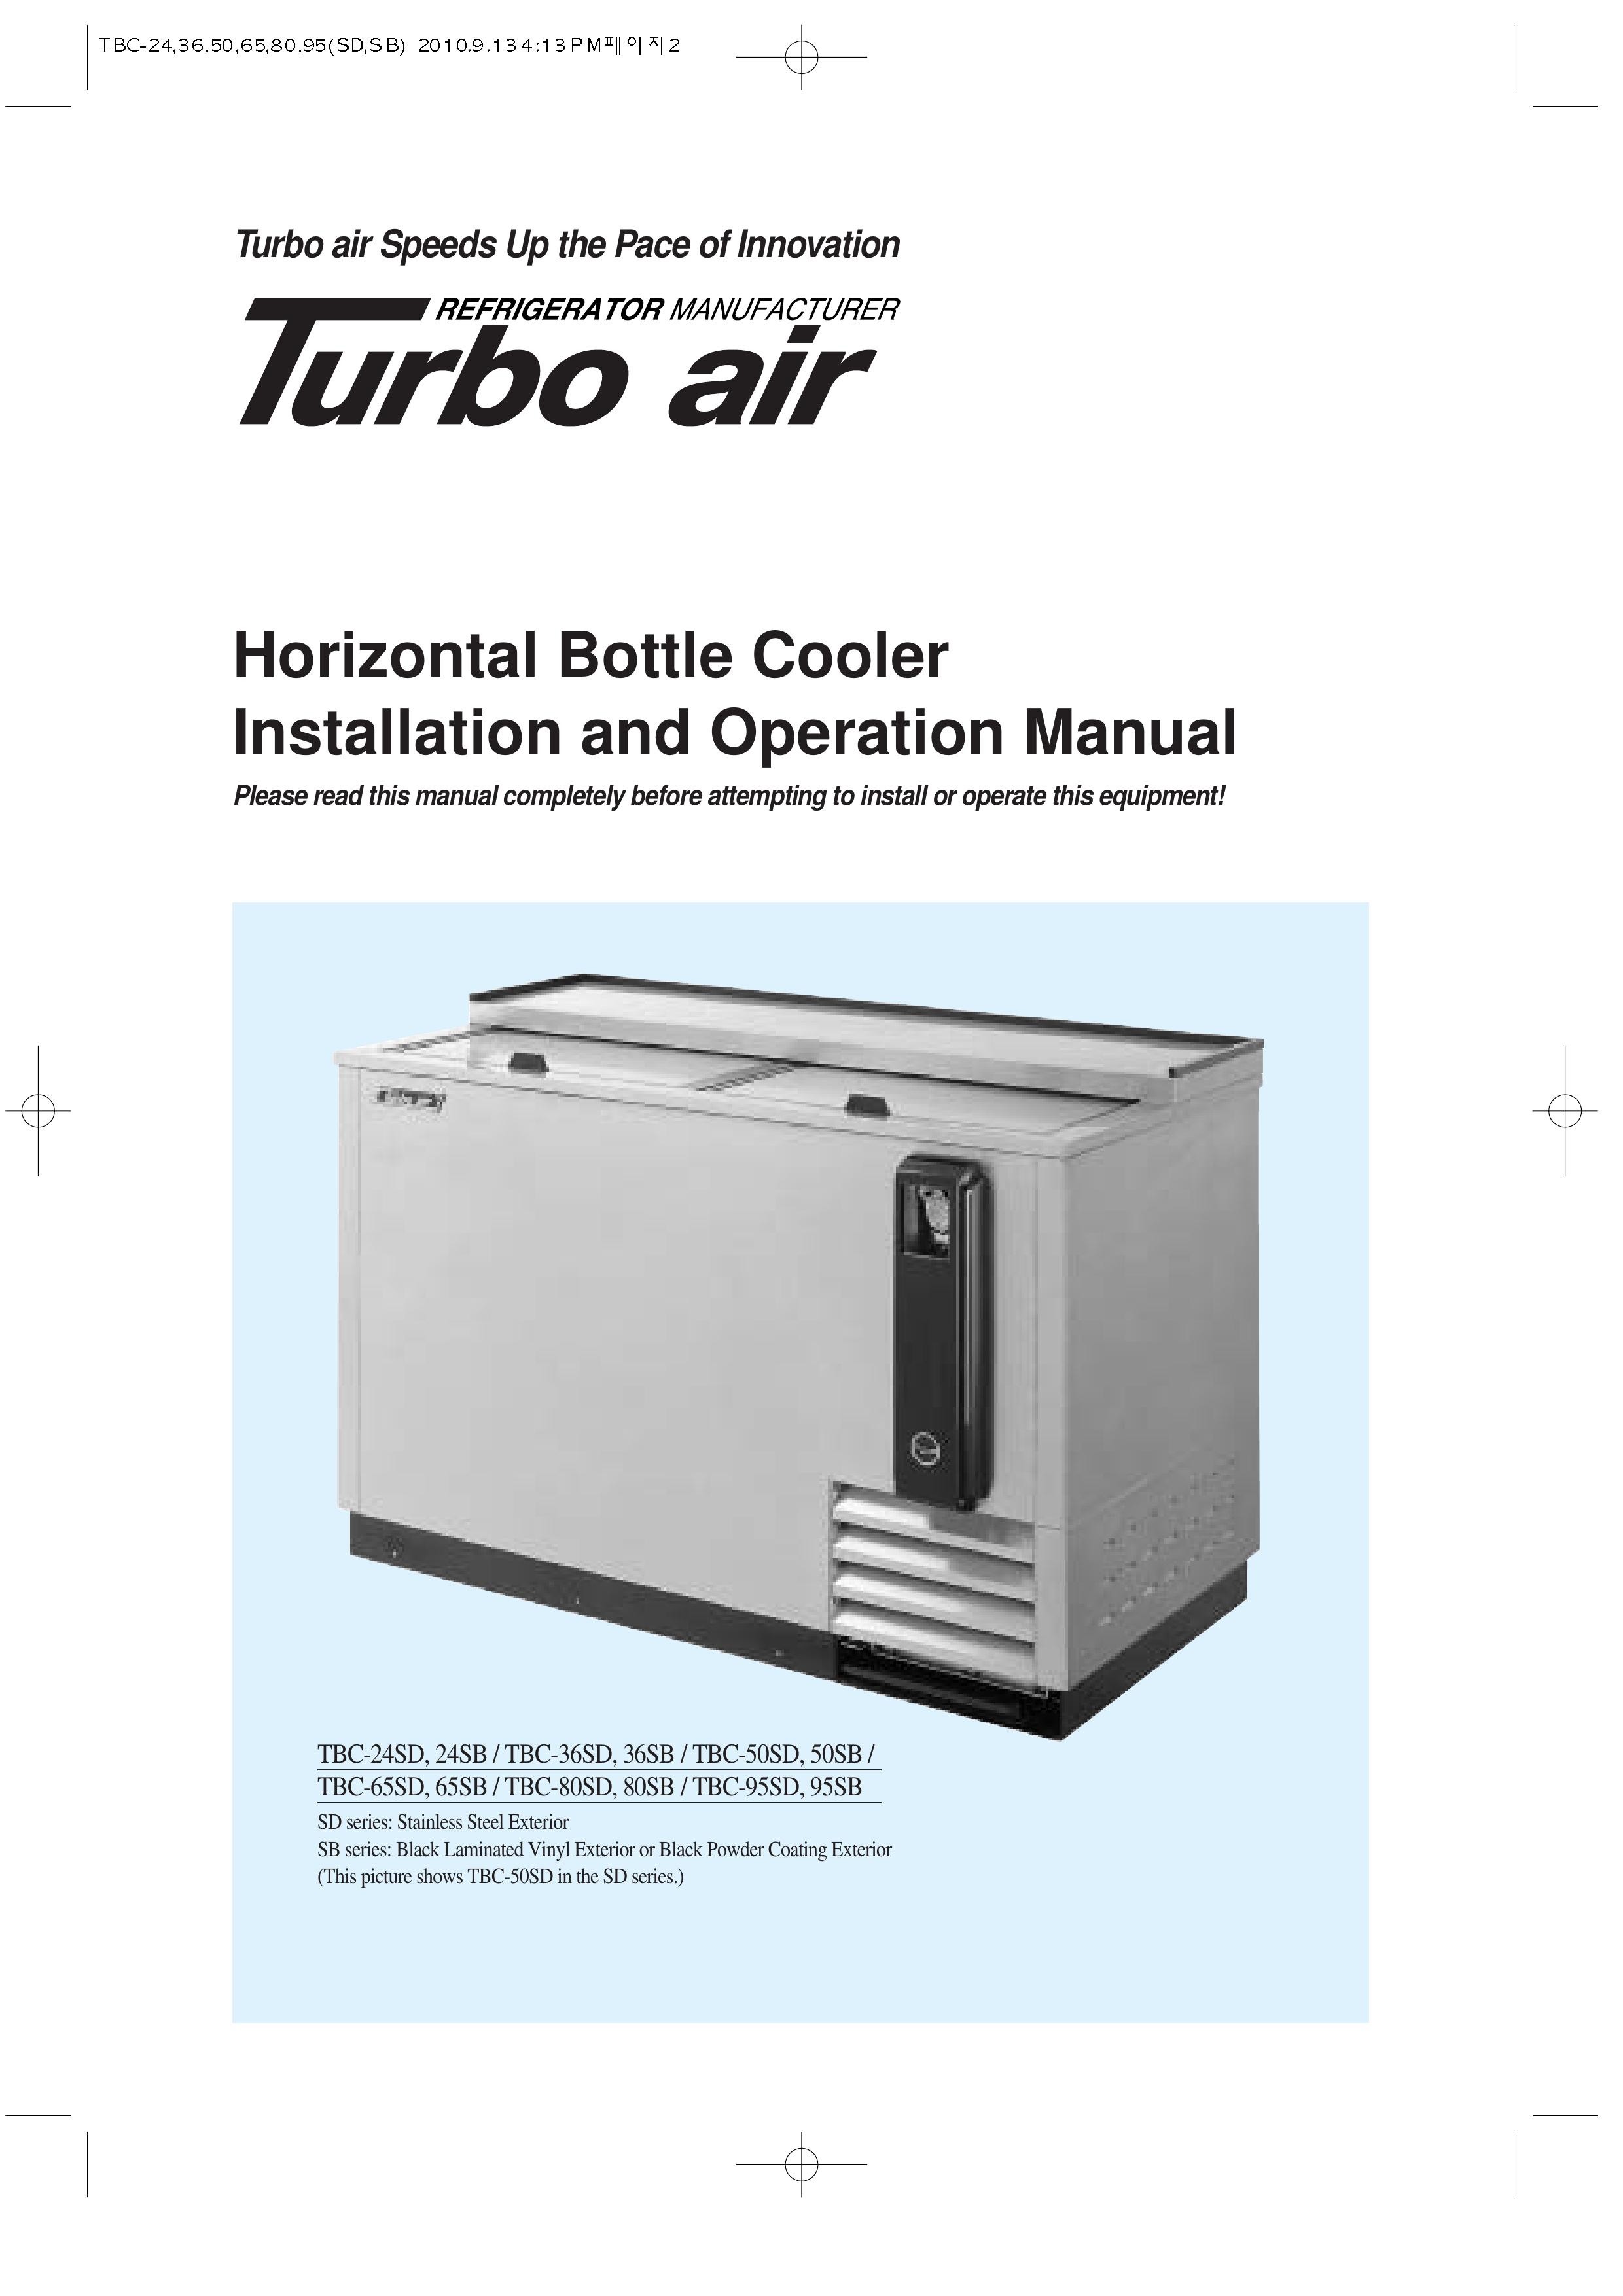 Turbo Air TBC-24SD, 24SB Refrigerator User Manual